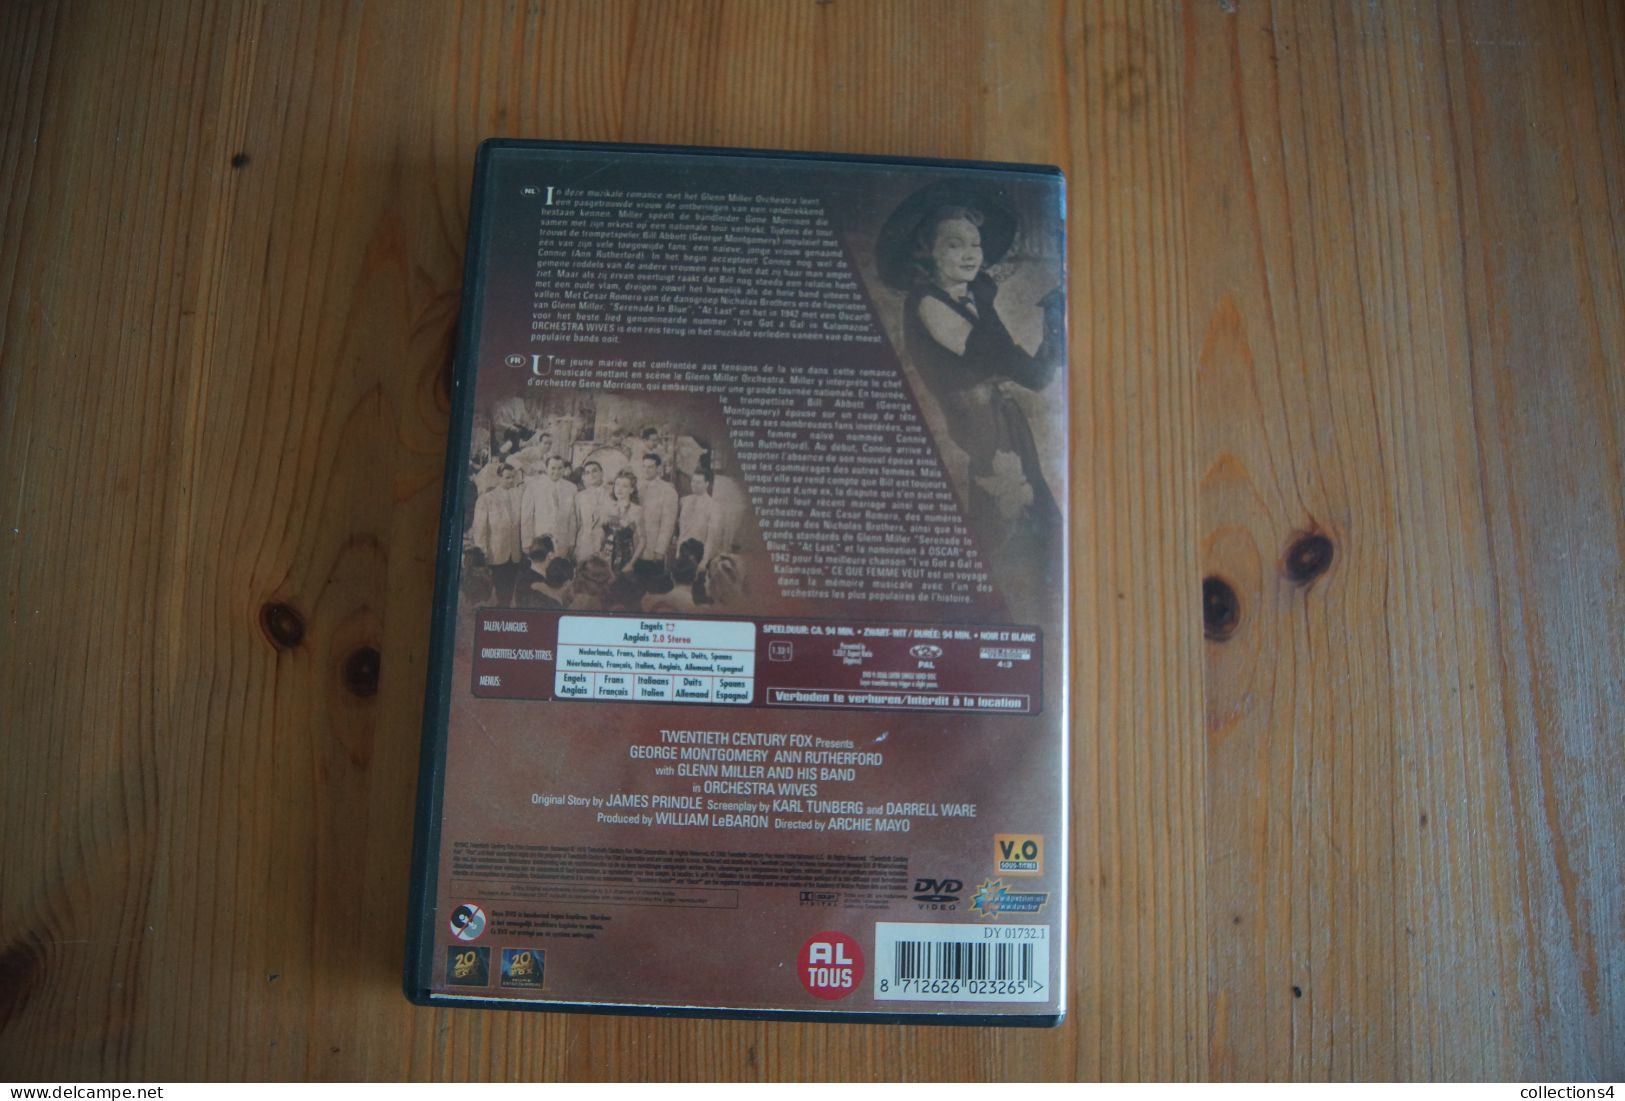 ORCHESTRA WIVES DVD DU FILM DE 1942 GLENN MILLER GEORGE MONTGOMERY ANN RUTHFORD BO TRES JAZZ - DVD Musicaux